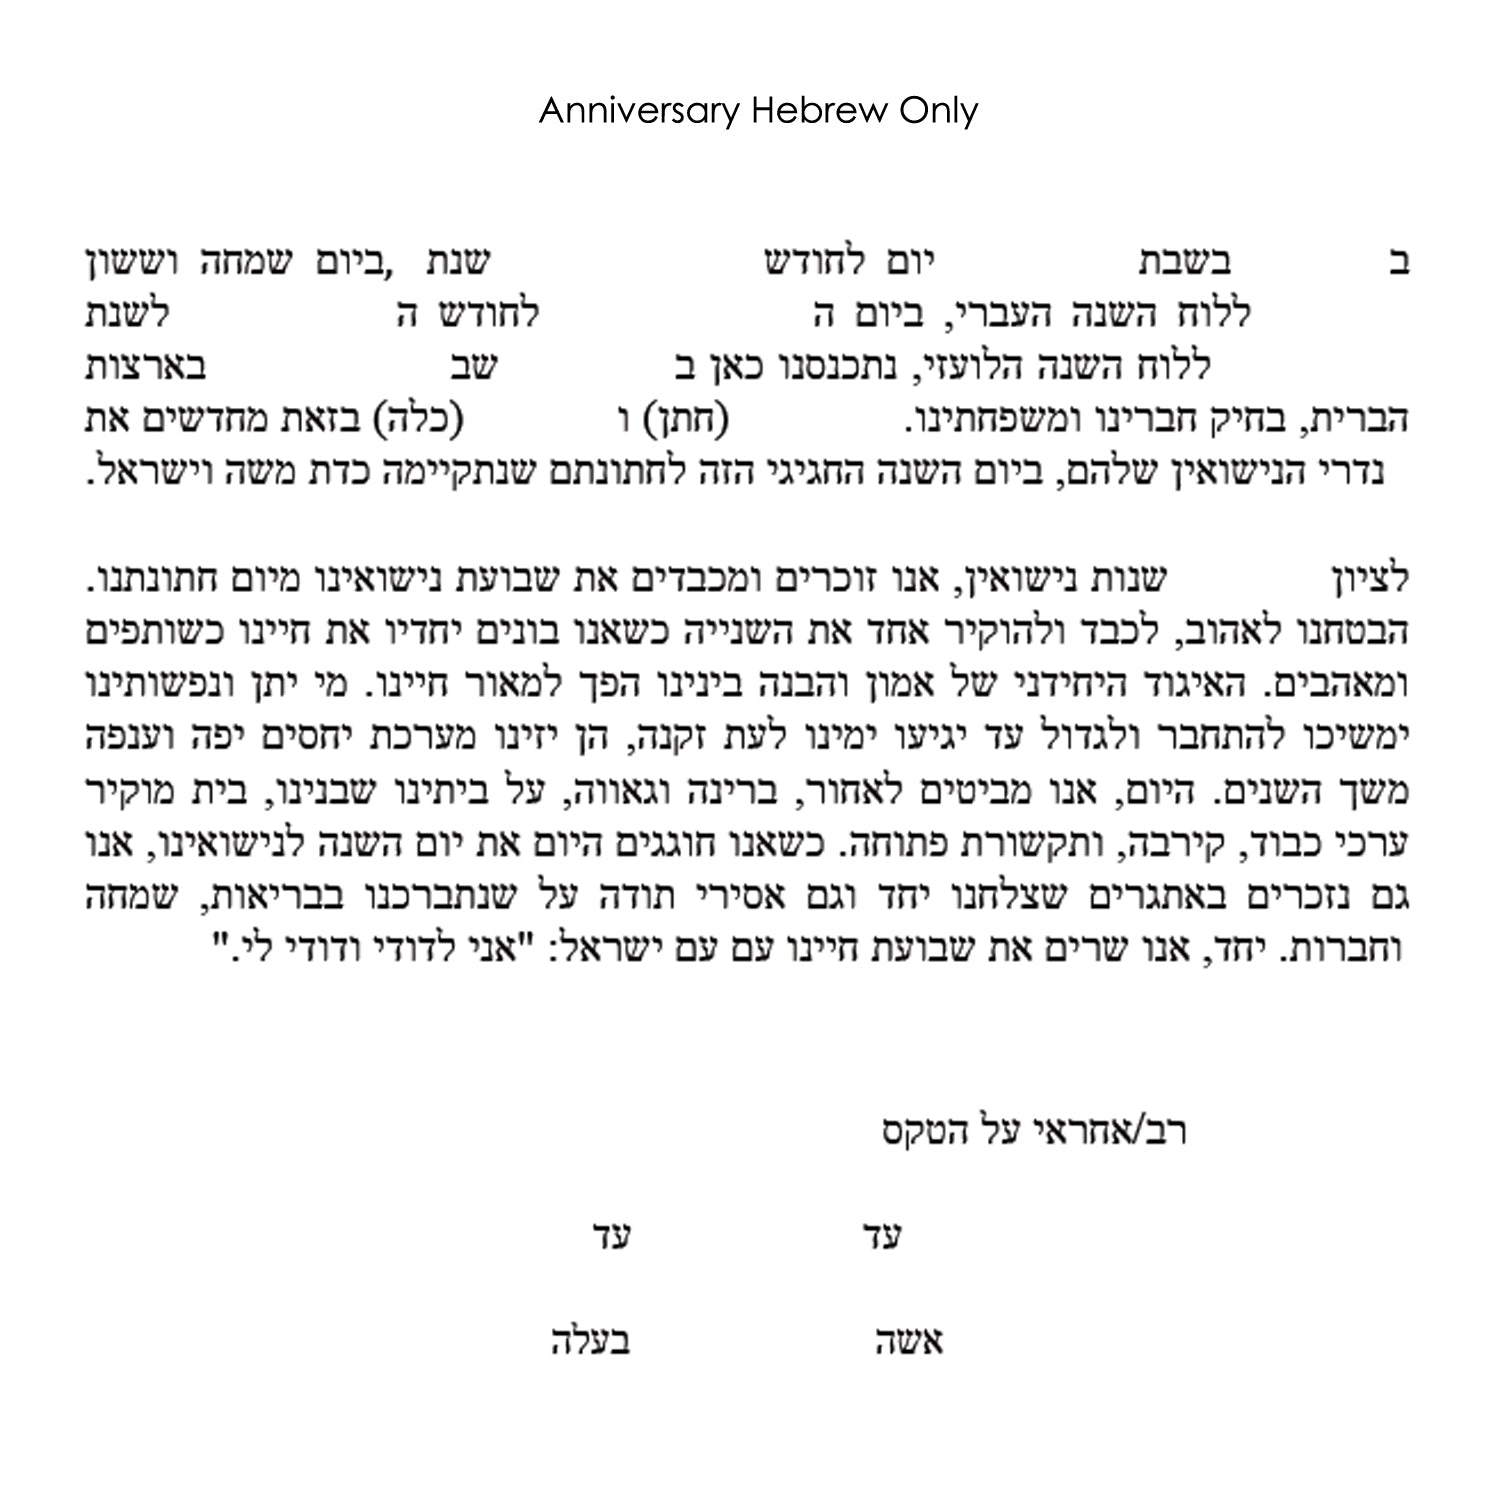 TINAK - Anniversary Hebrew Only text